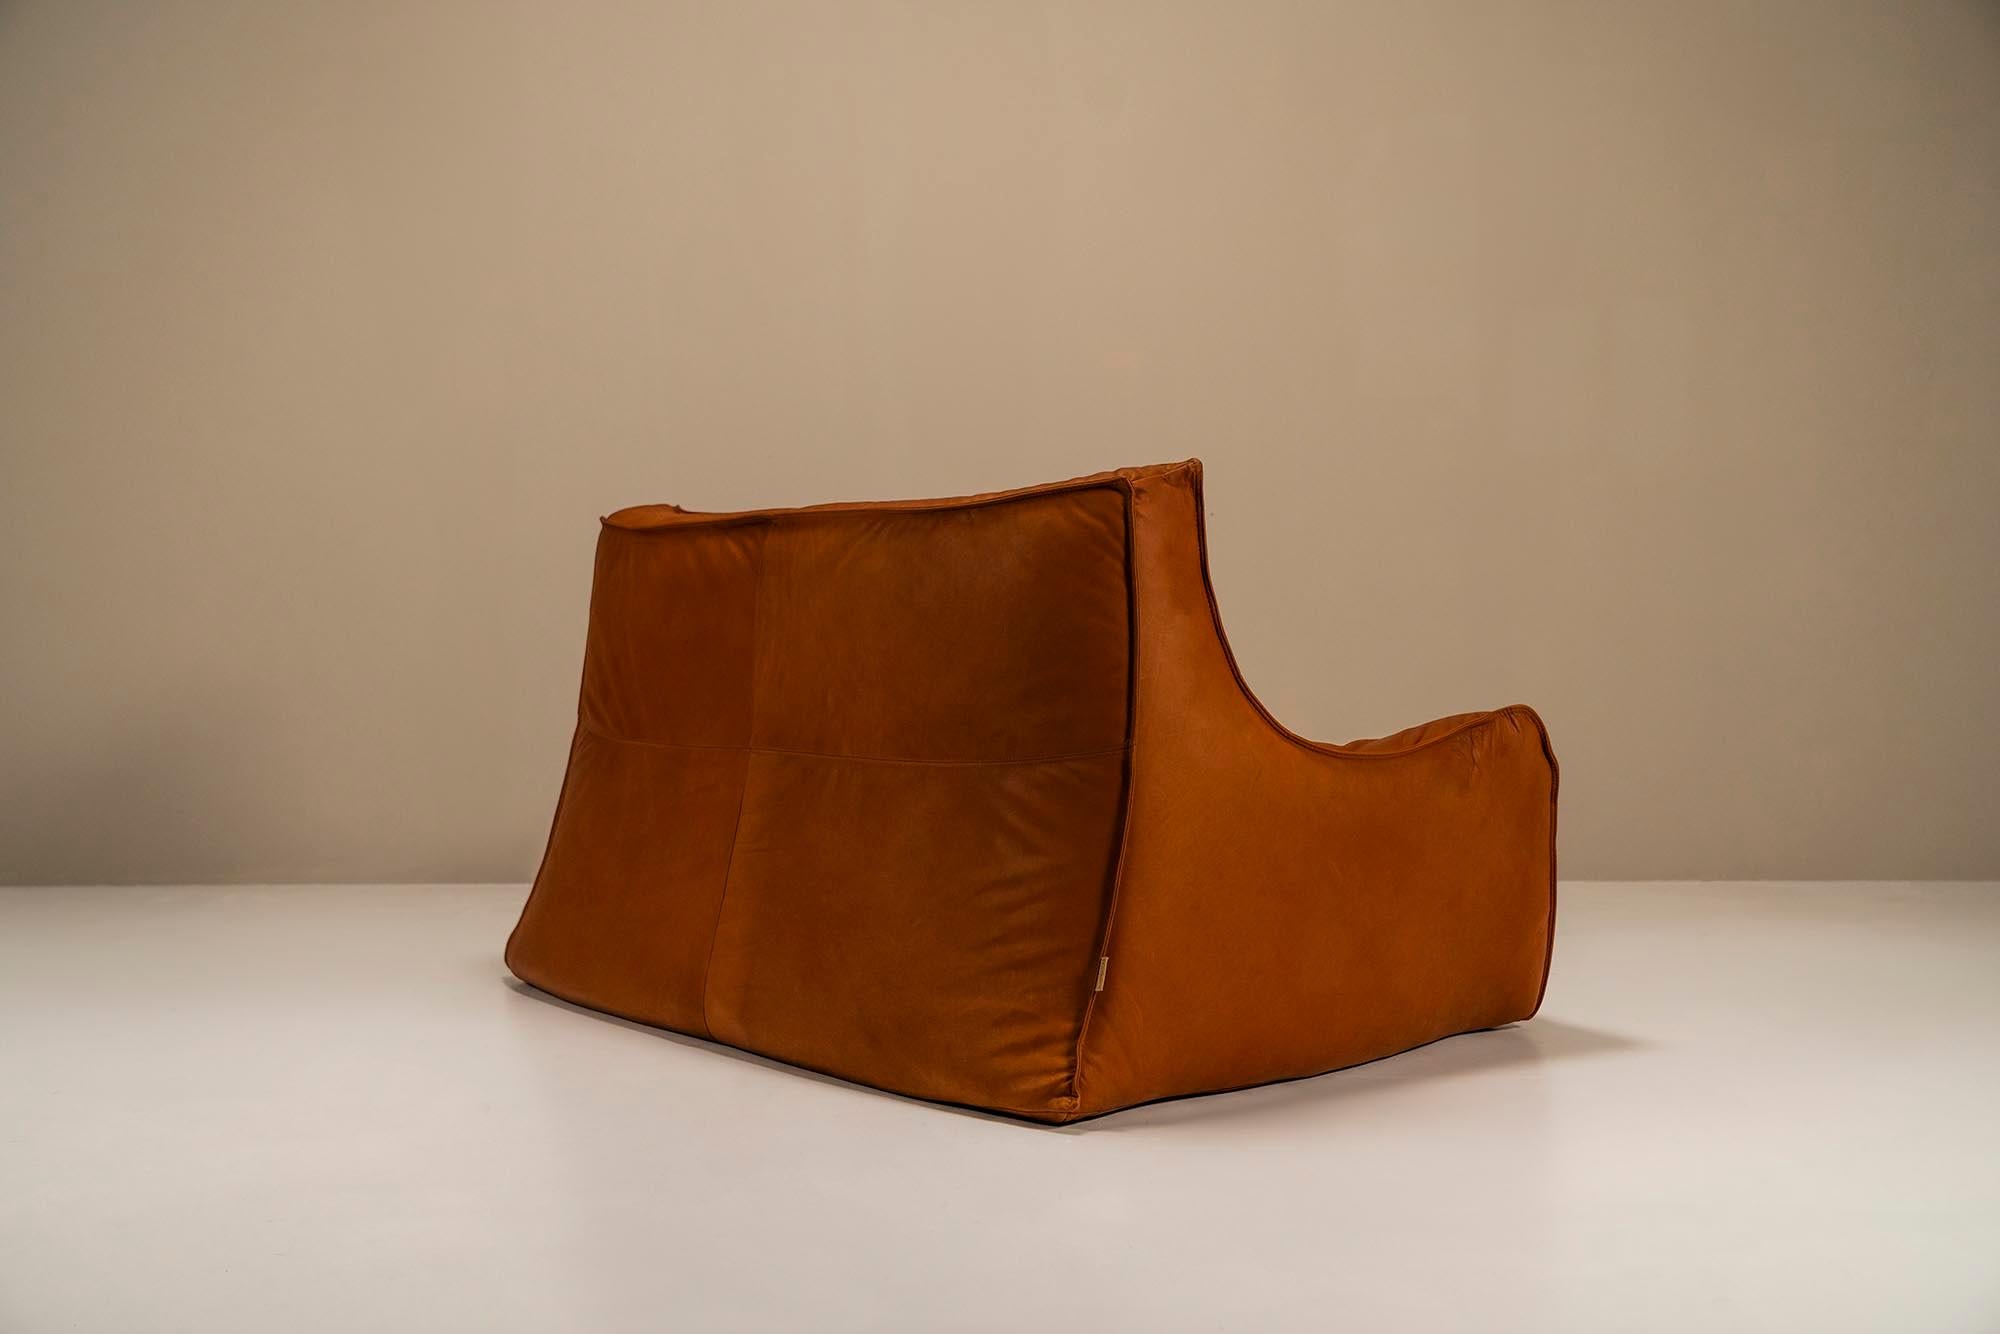 Late 20th Century Two-Seater Sofa Model “Satan” By Bernard Govin For Ligne Roset, France 1970s For Sale